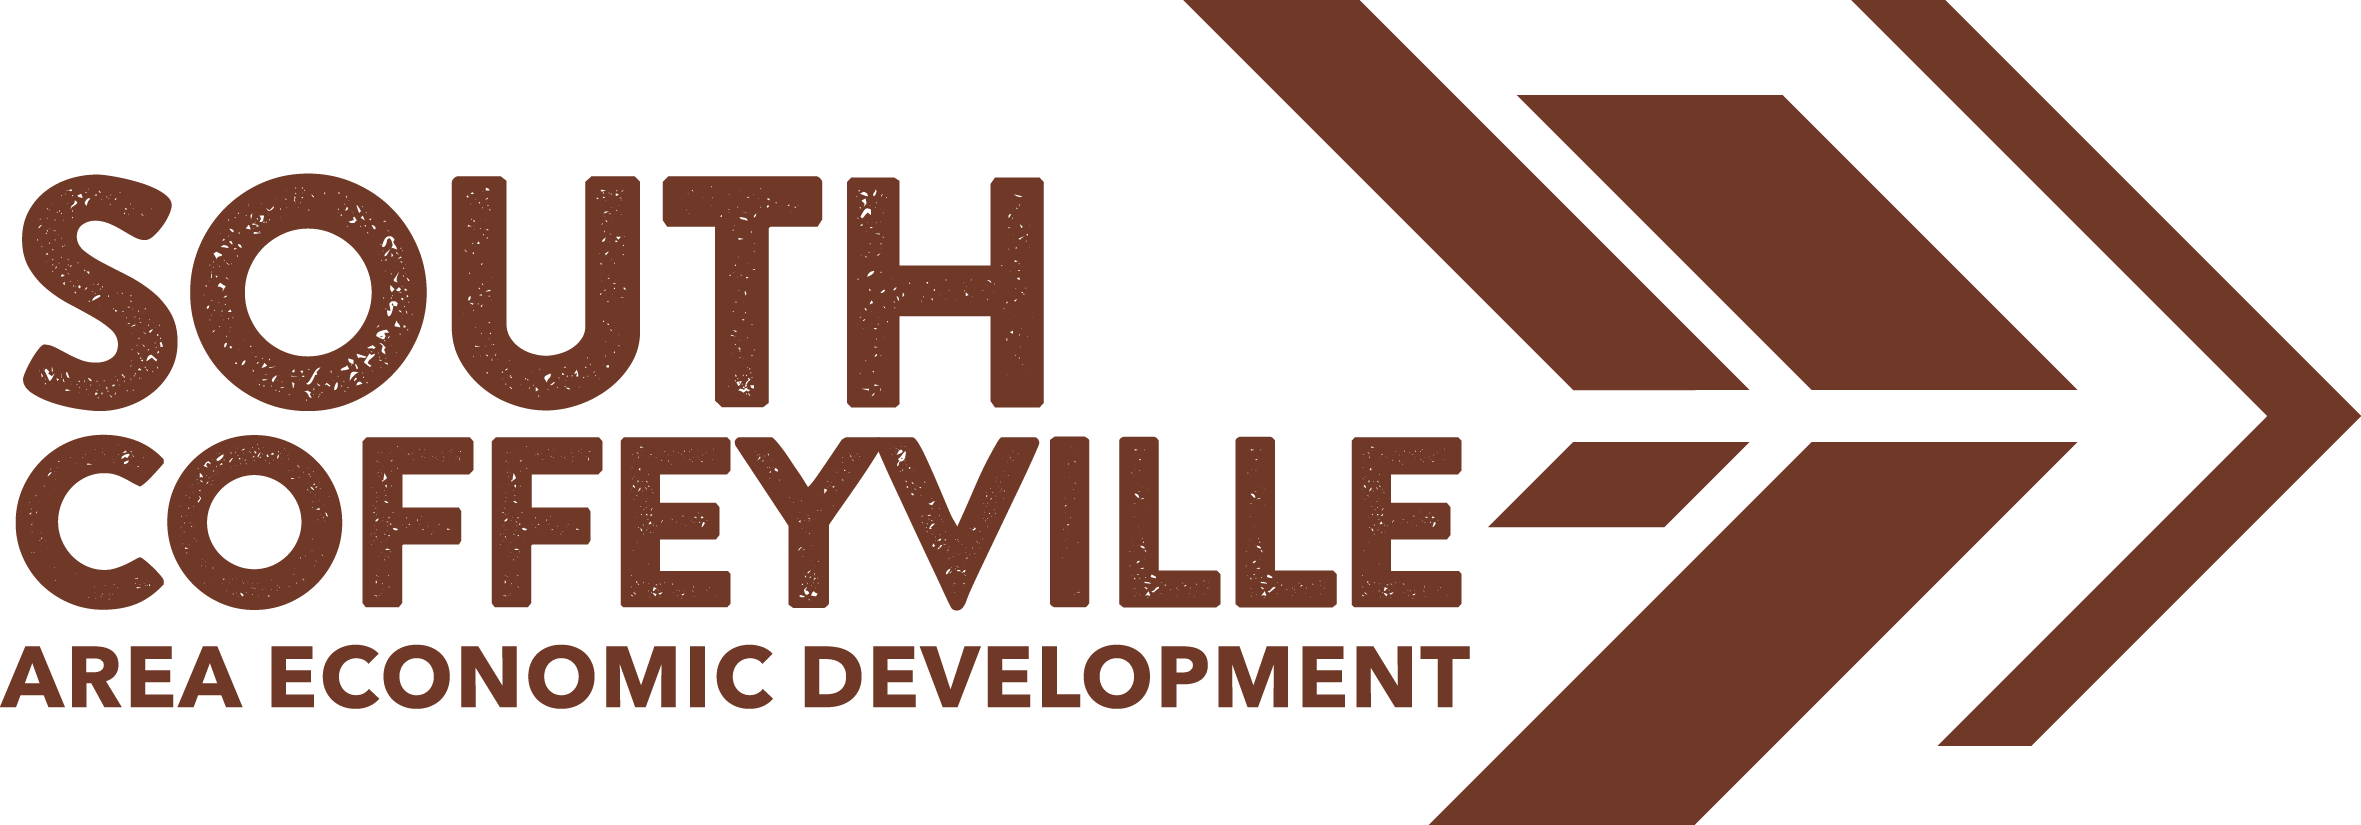 South Coffeyville Area Development Authority